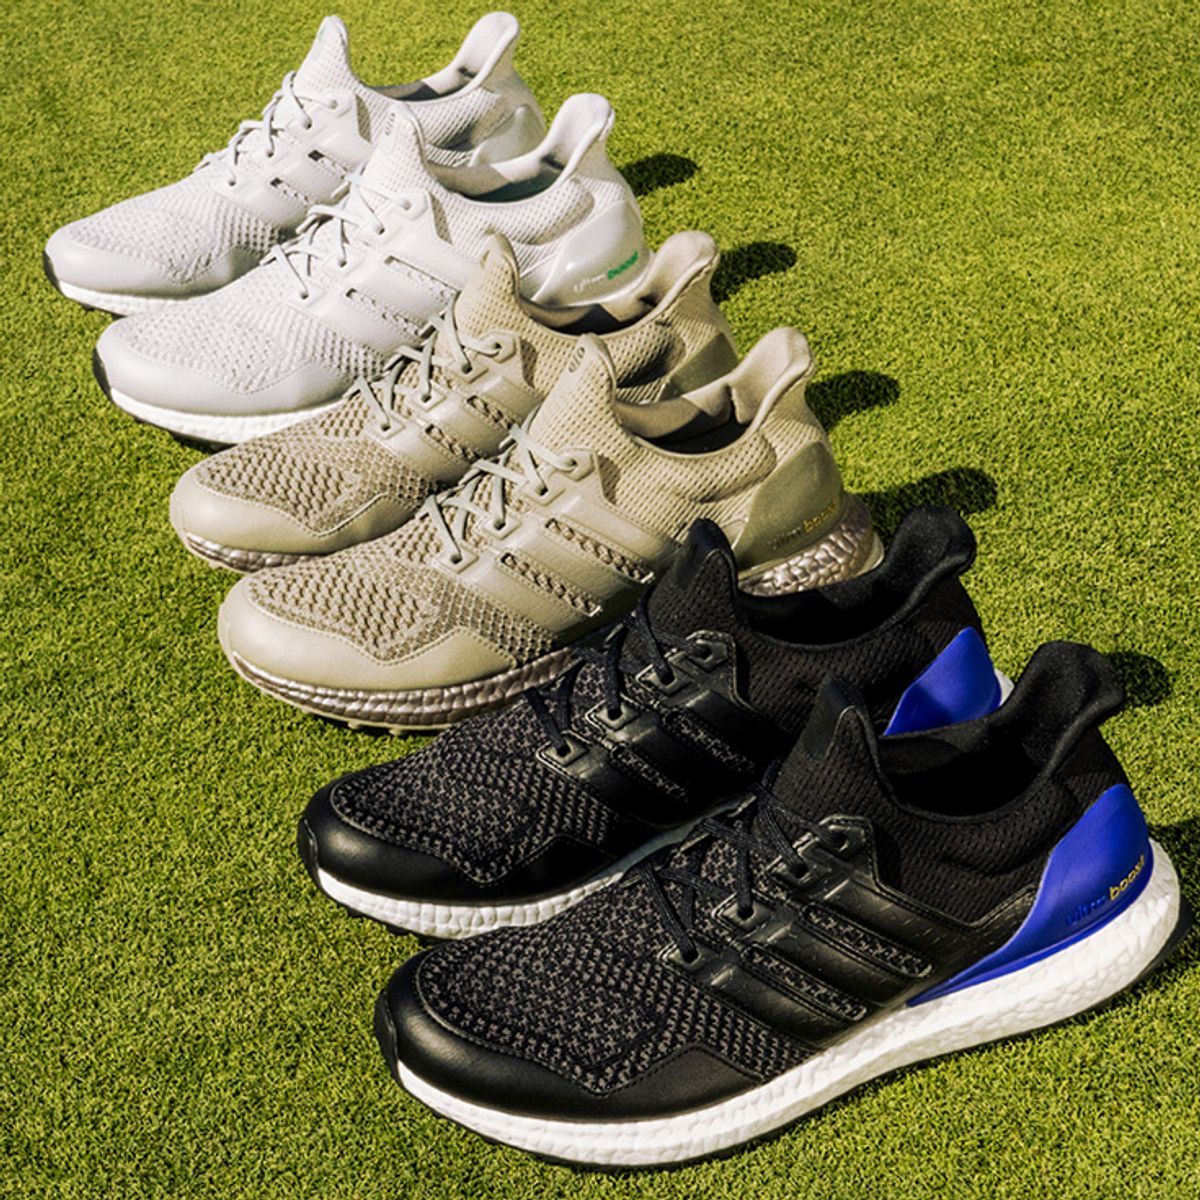 The adidas Ultraboost Golf Ready to Tee Off - Sneaker Freaker